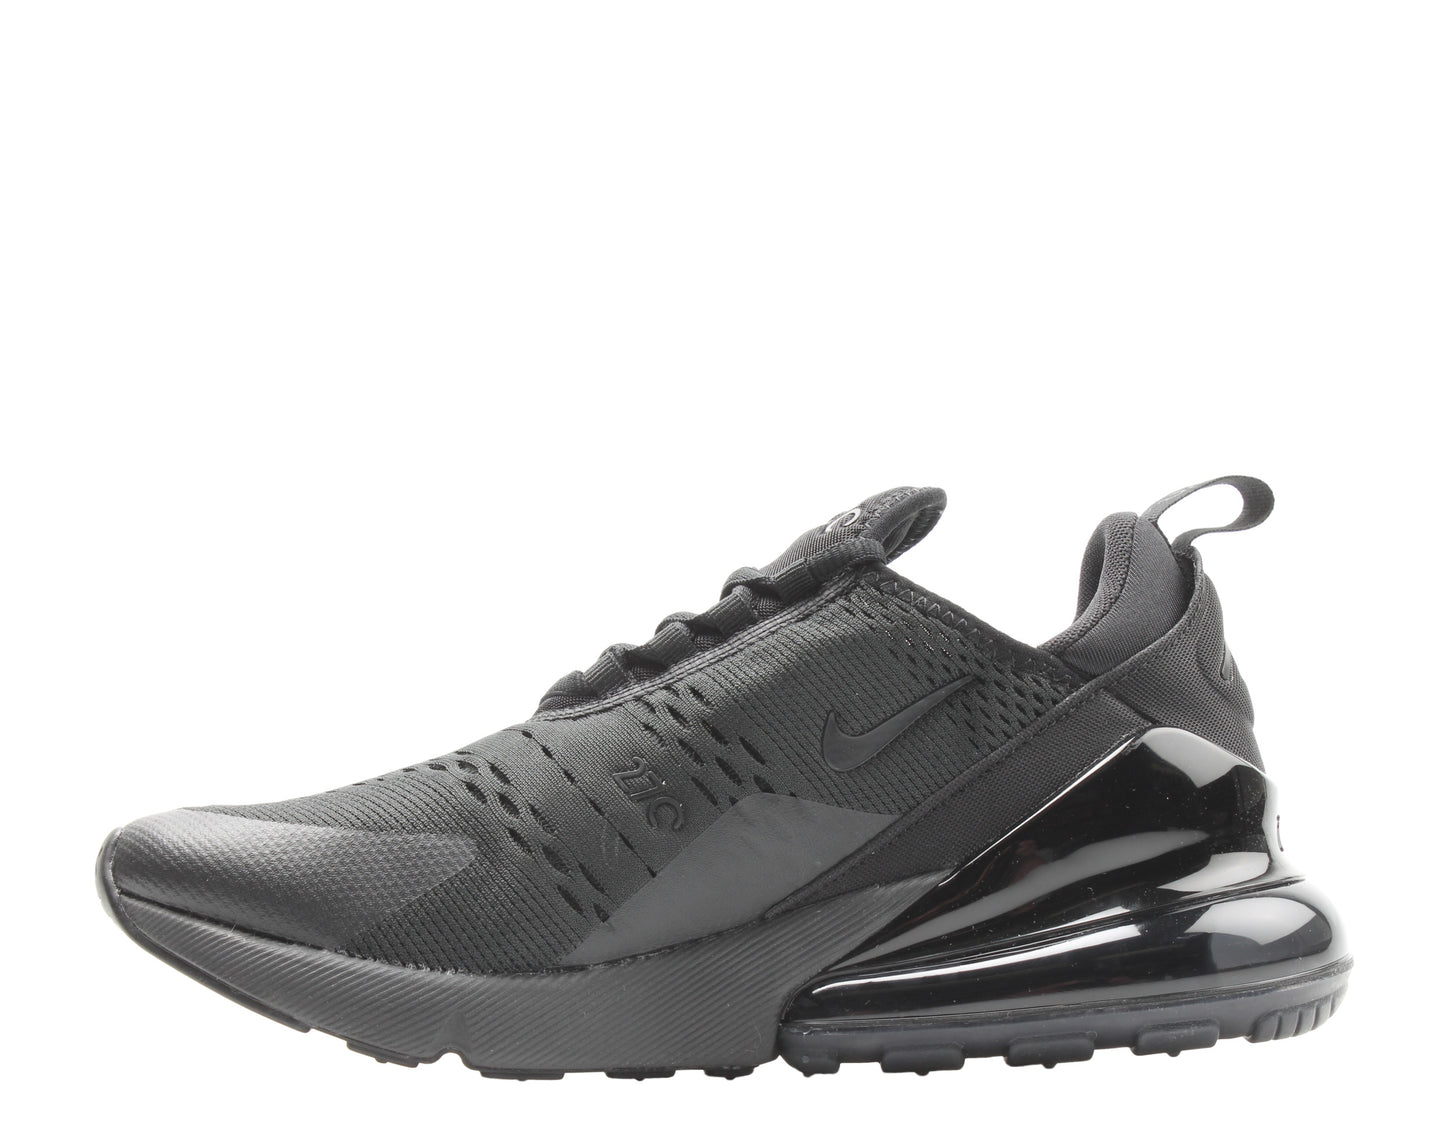 Nike Air Max 270 Triple Black/Black-Black Men's Lifestyle Shoes AH8050-005